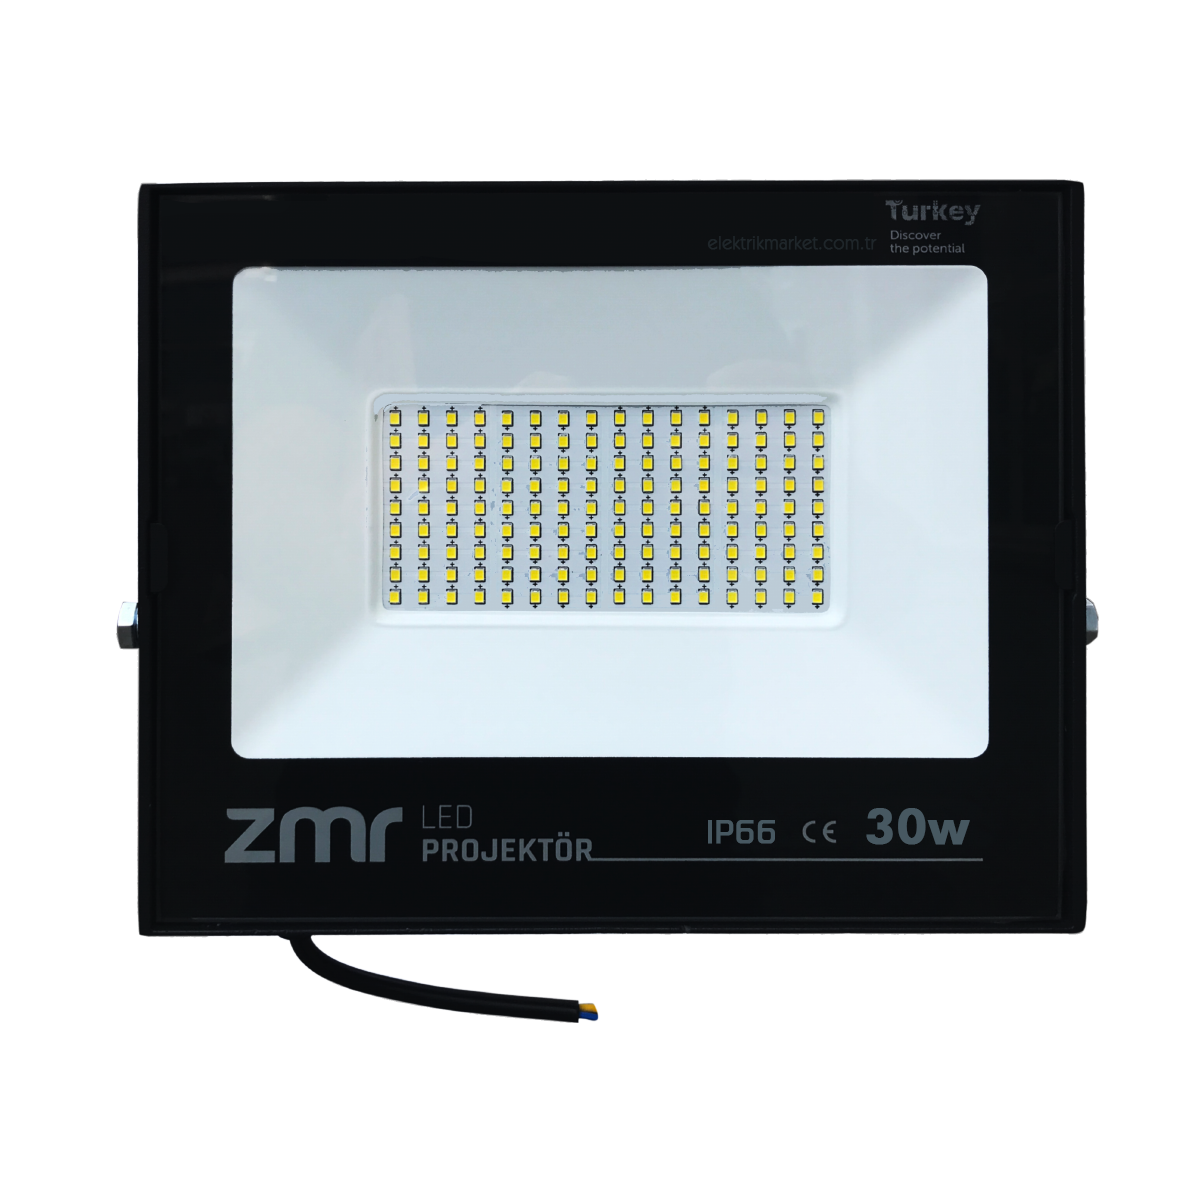 ZMR 30W Slim Led Projektör ZMR-301/S.